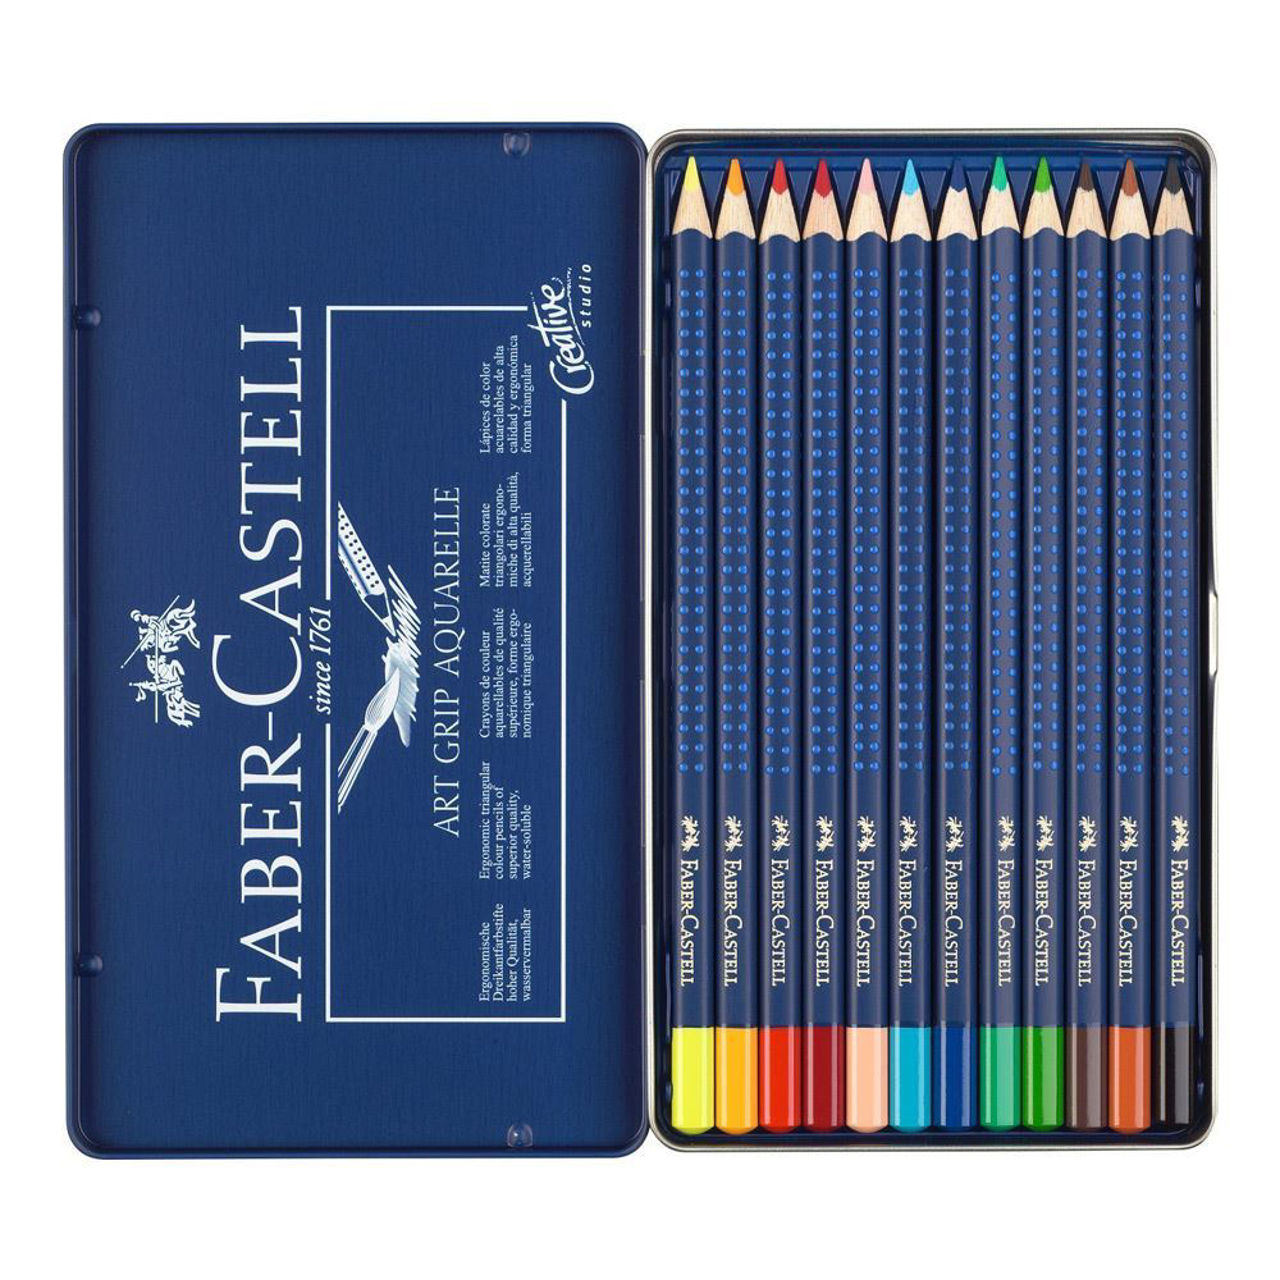 Home Carpe Diem Markers. FaberCastell Polychromos Color Pencil Sets